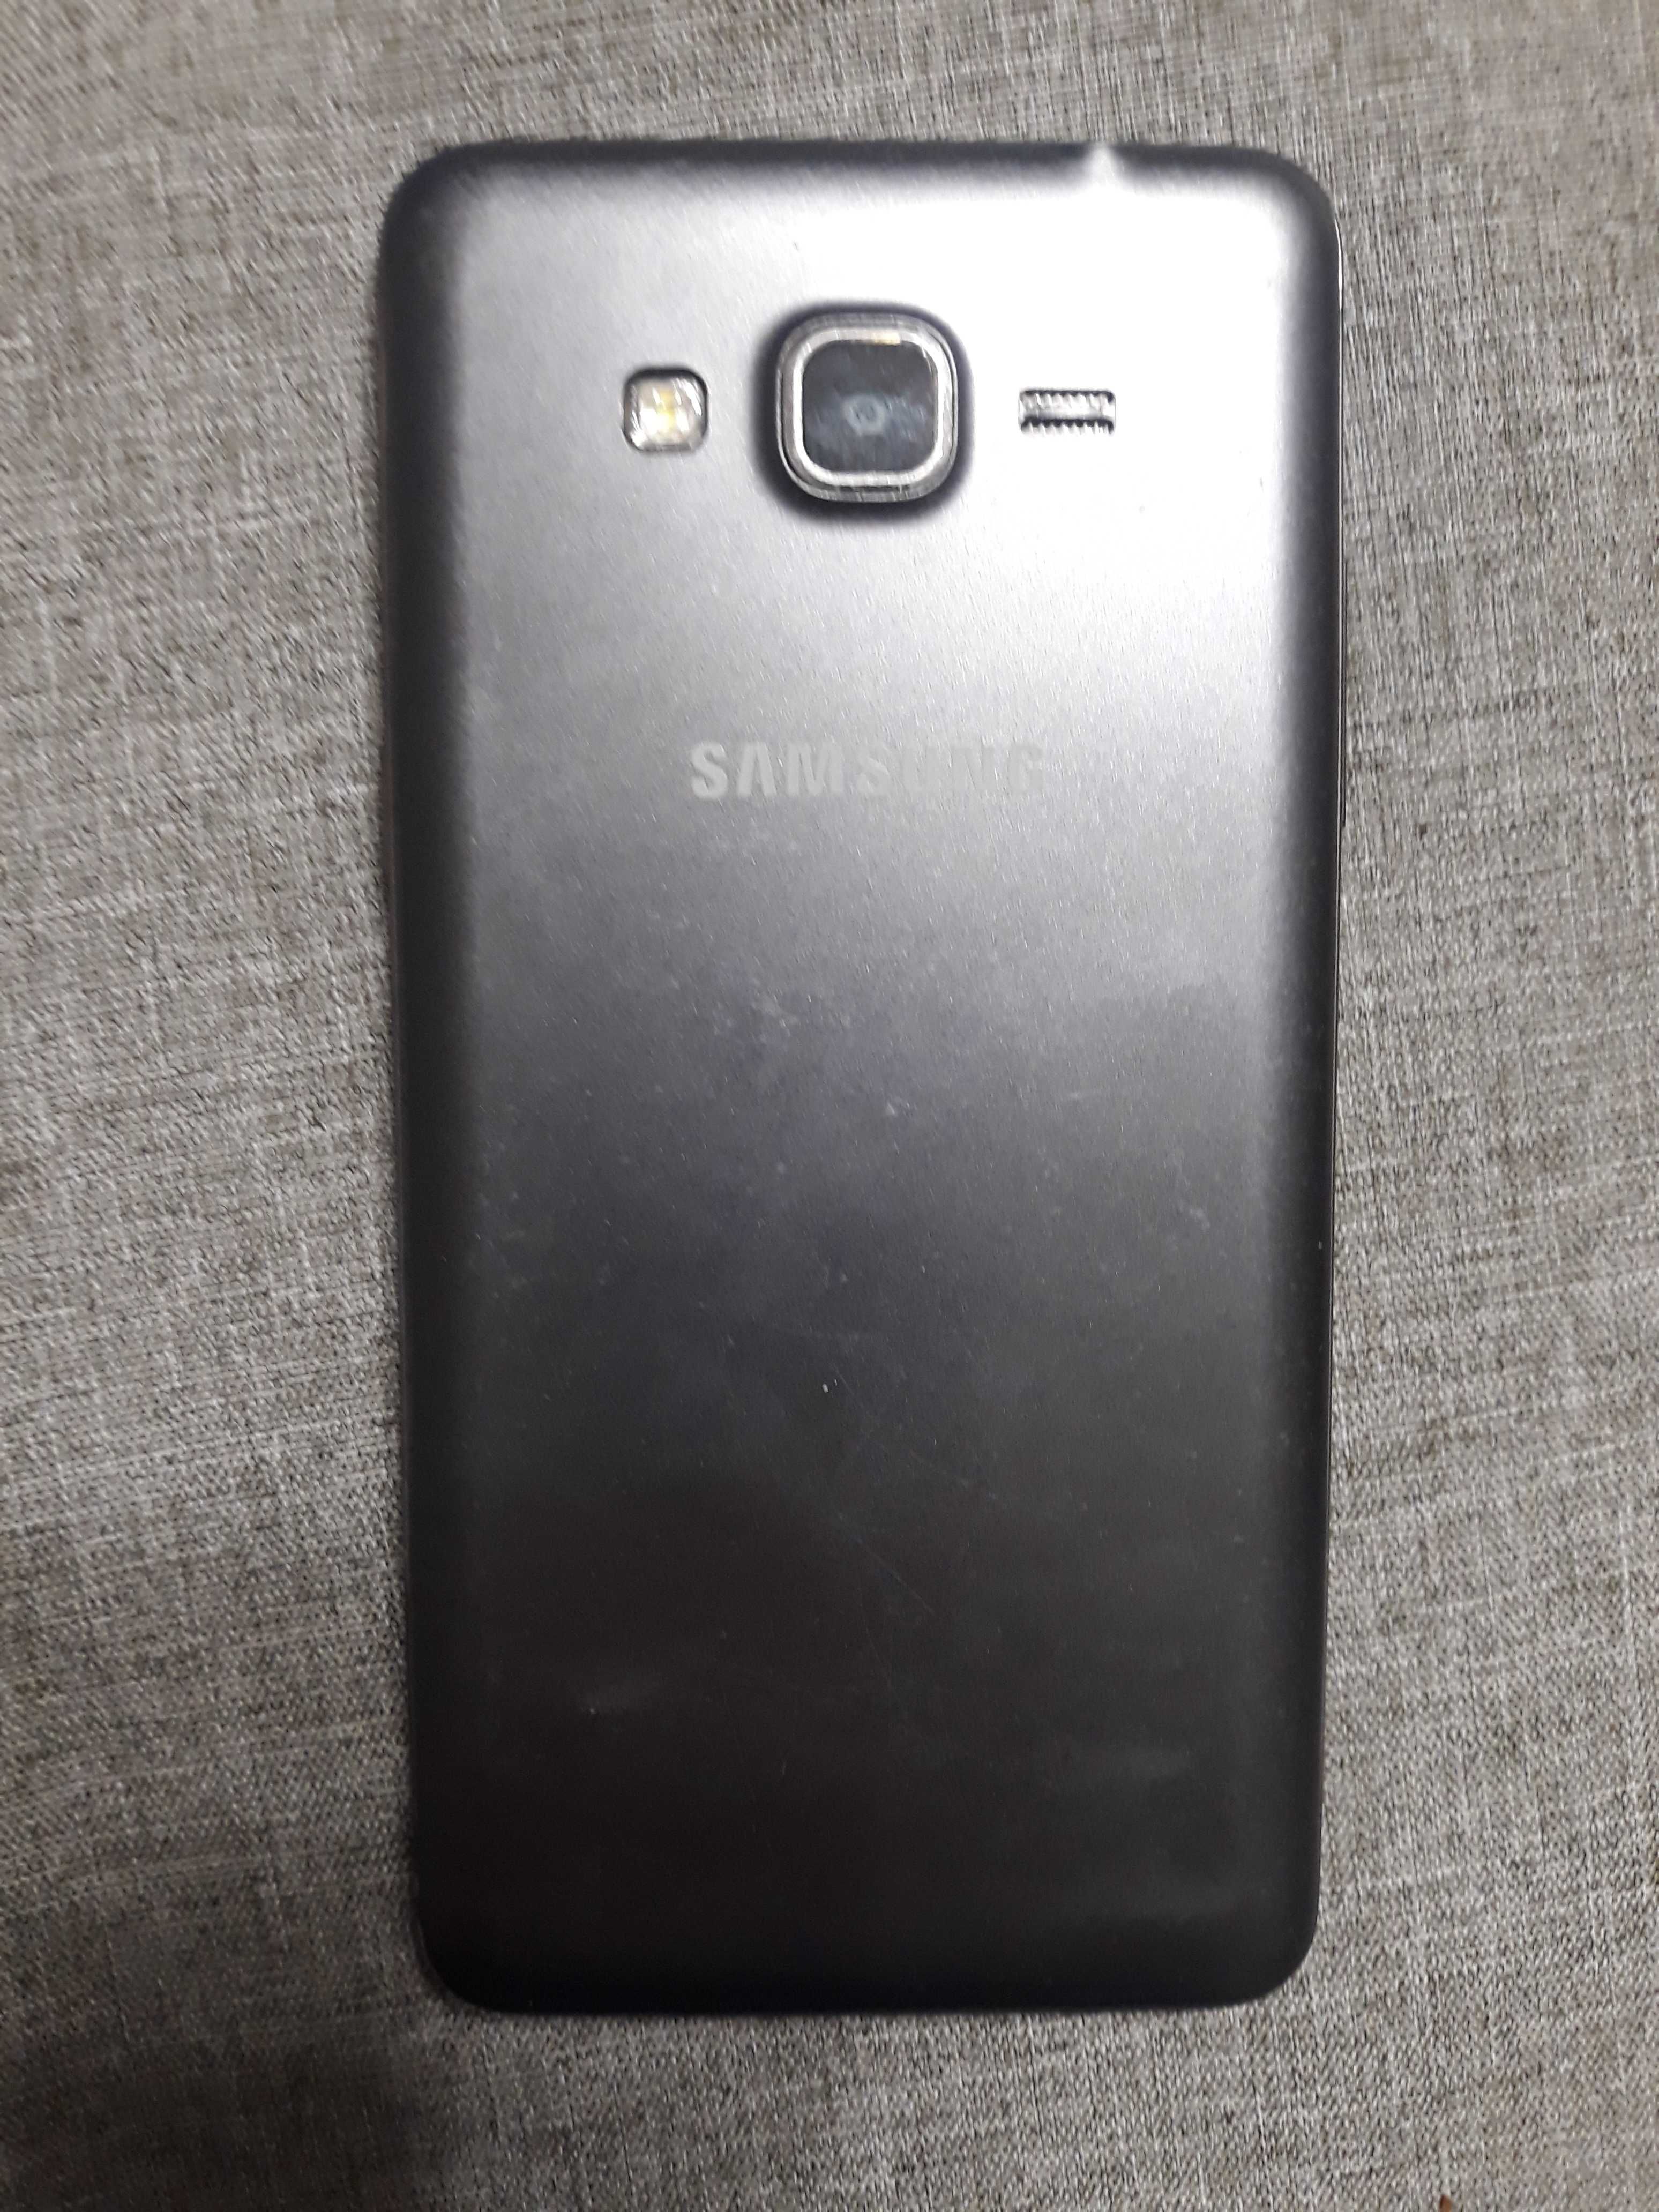 Smartfon - Galaxy Grand Prime SM-G530FZ